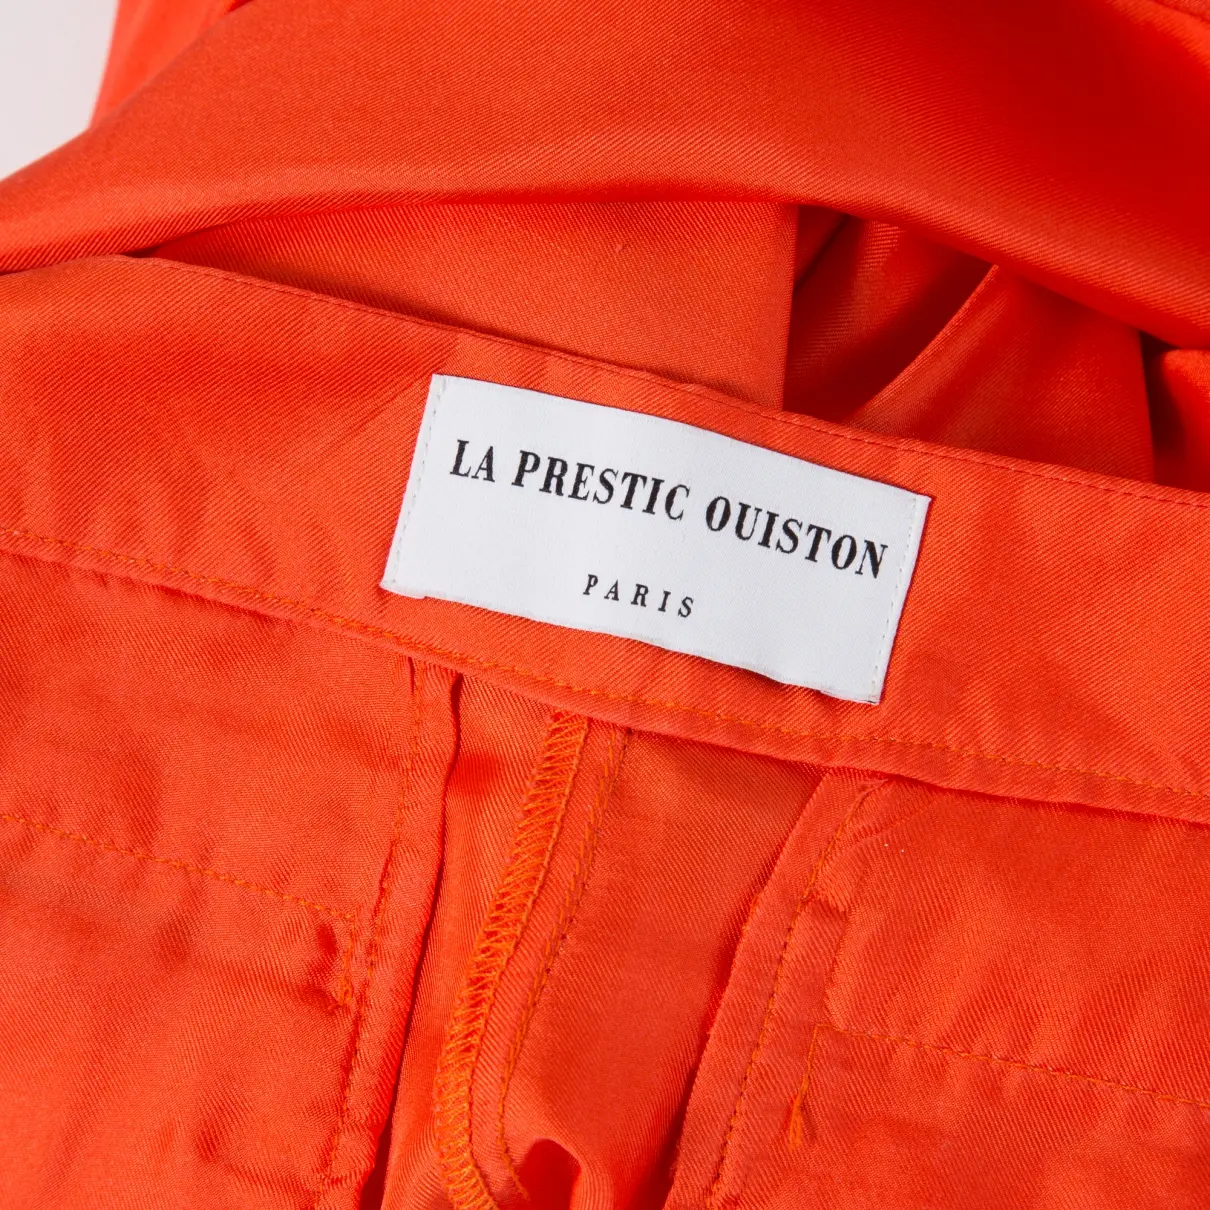 Buy La Prestic Ouiston Silk large pants online